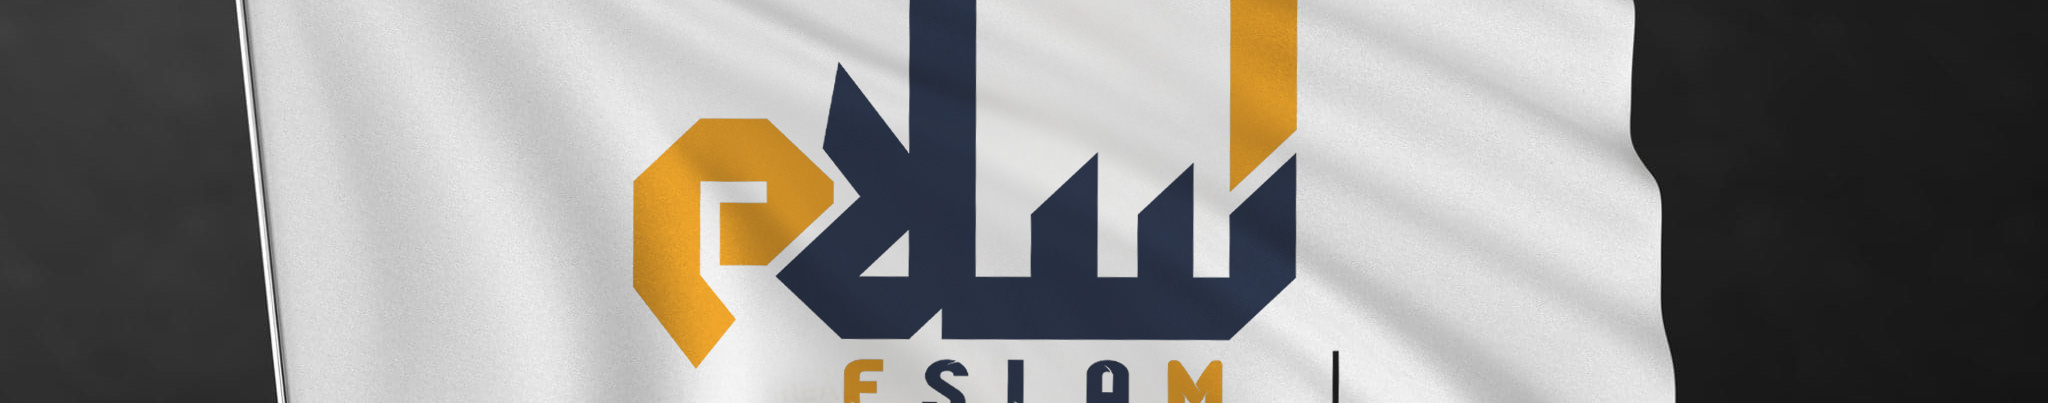 Eslam Abd El Azim's profile banner